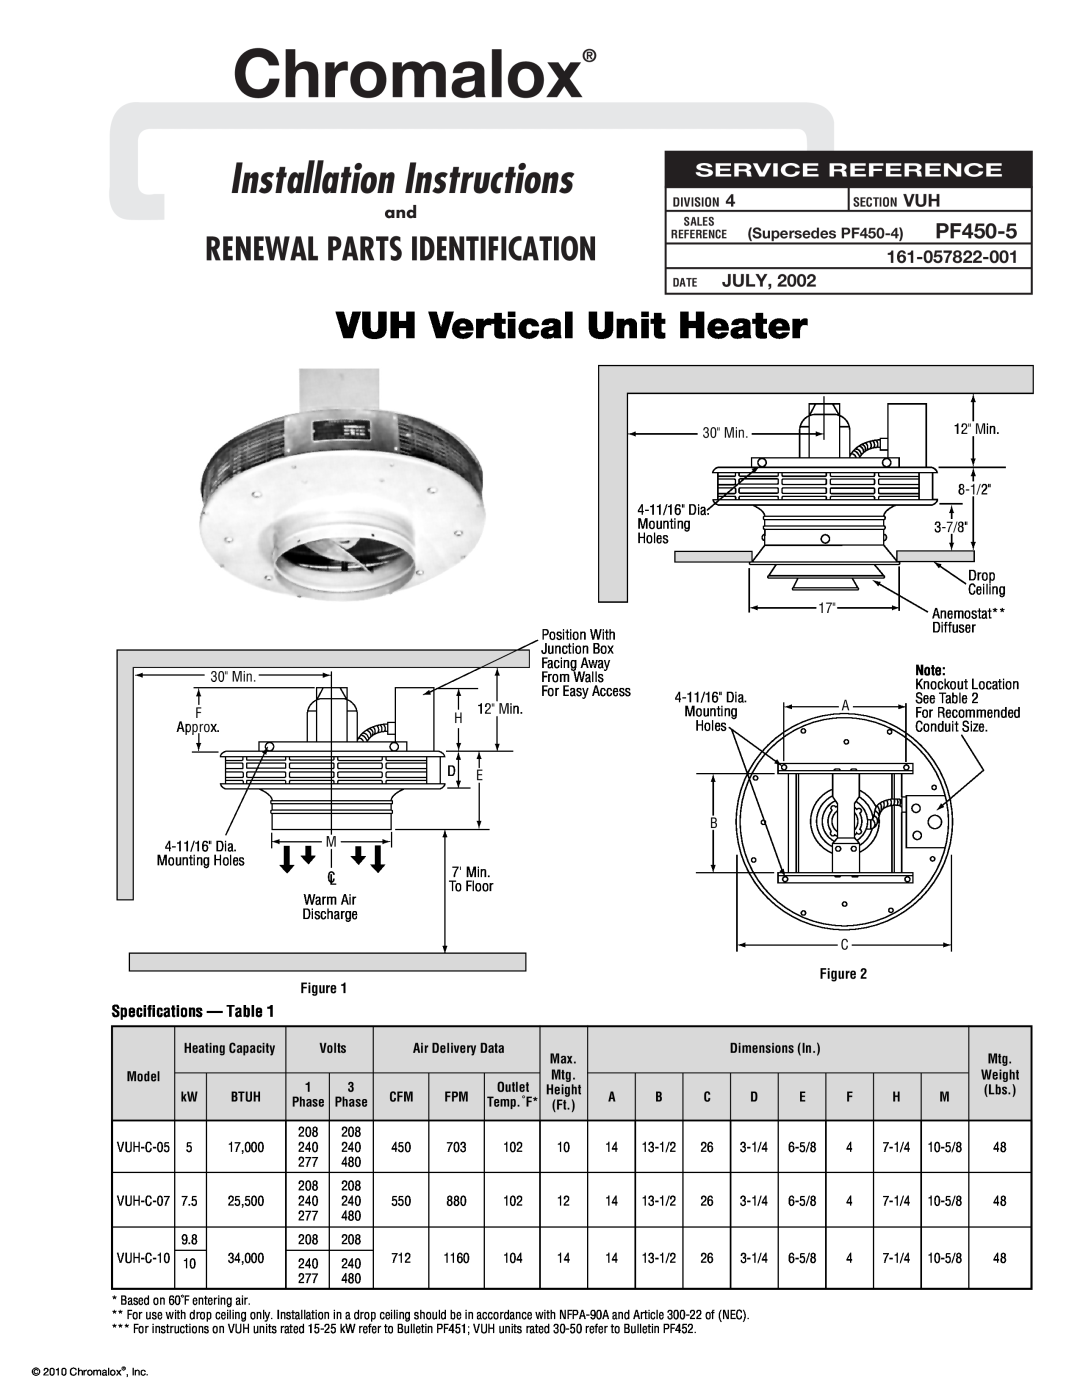 Chromalox PF450-5 specifications 161-057822-001, Date July, Installation Instructions, VUH Vertical Unit Heater 